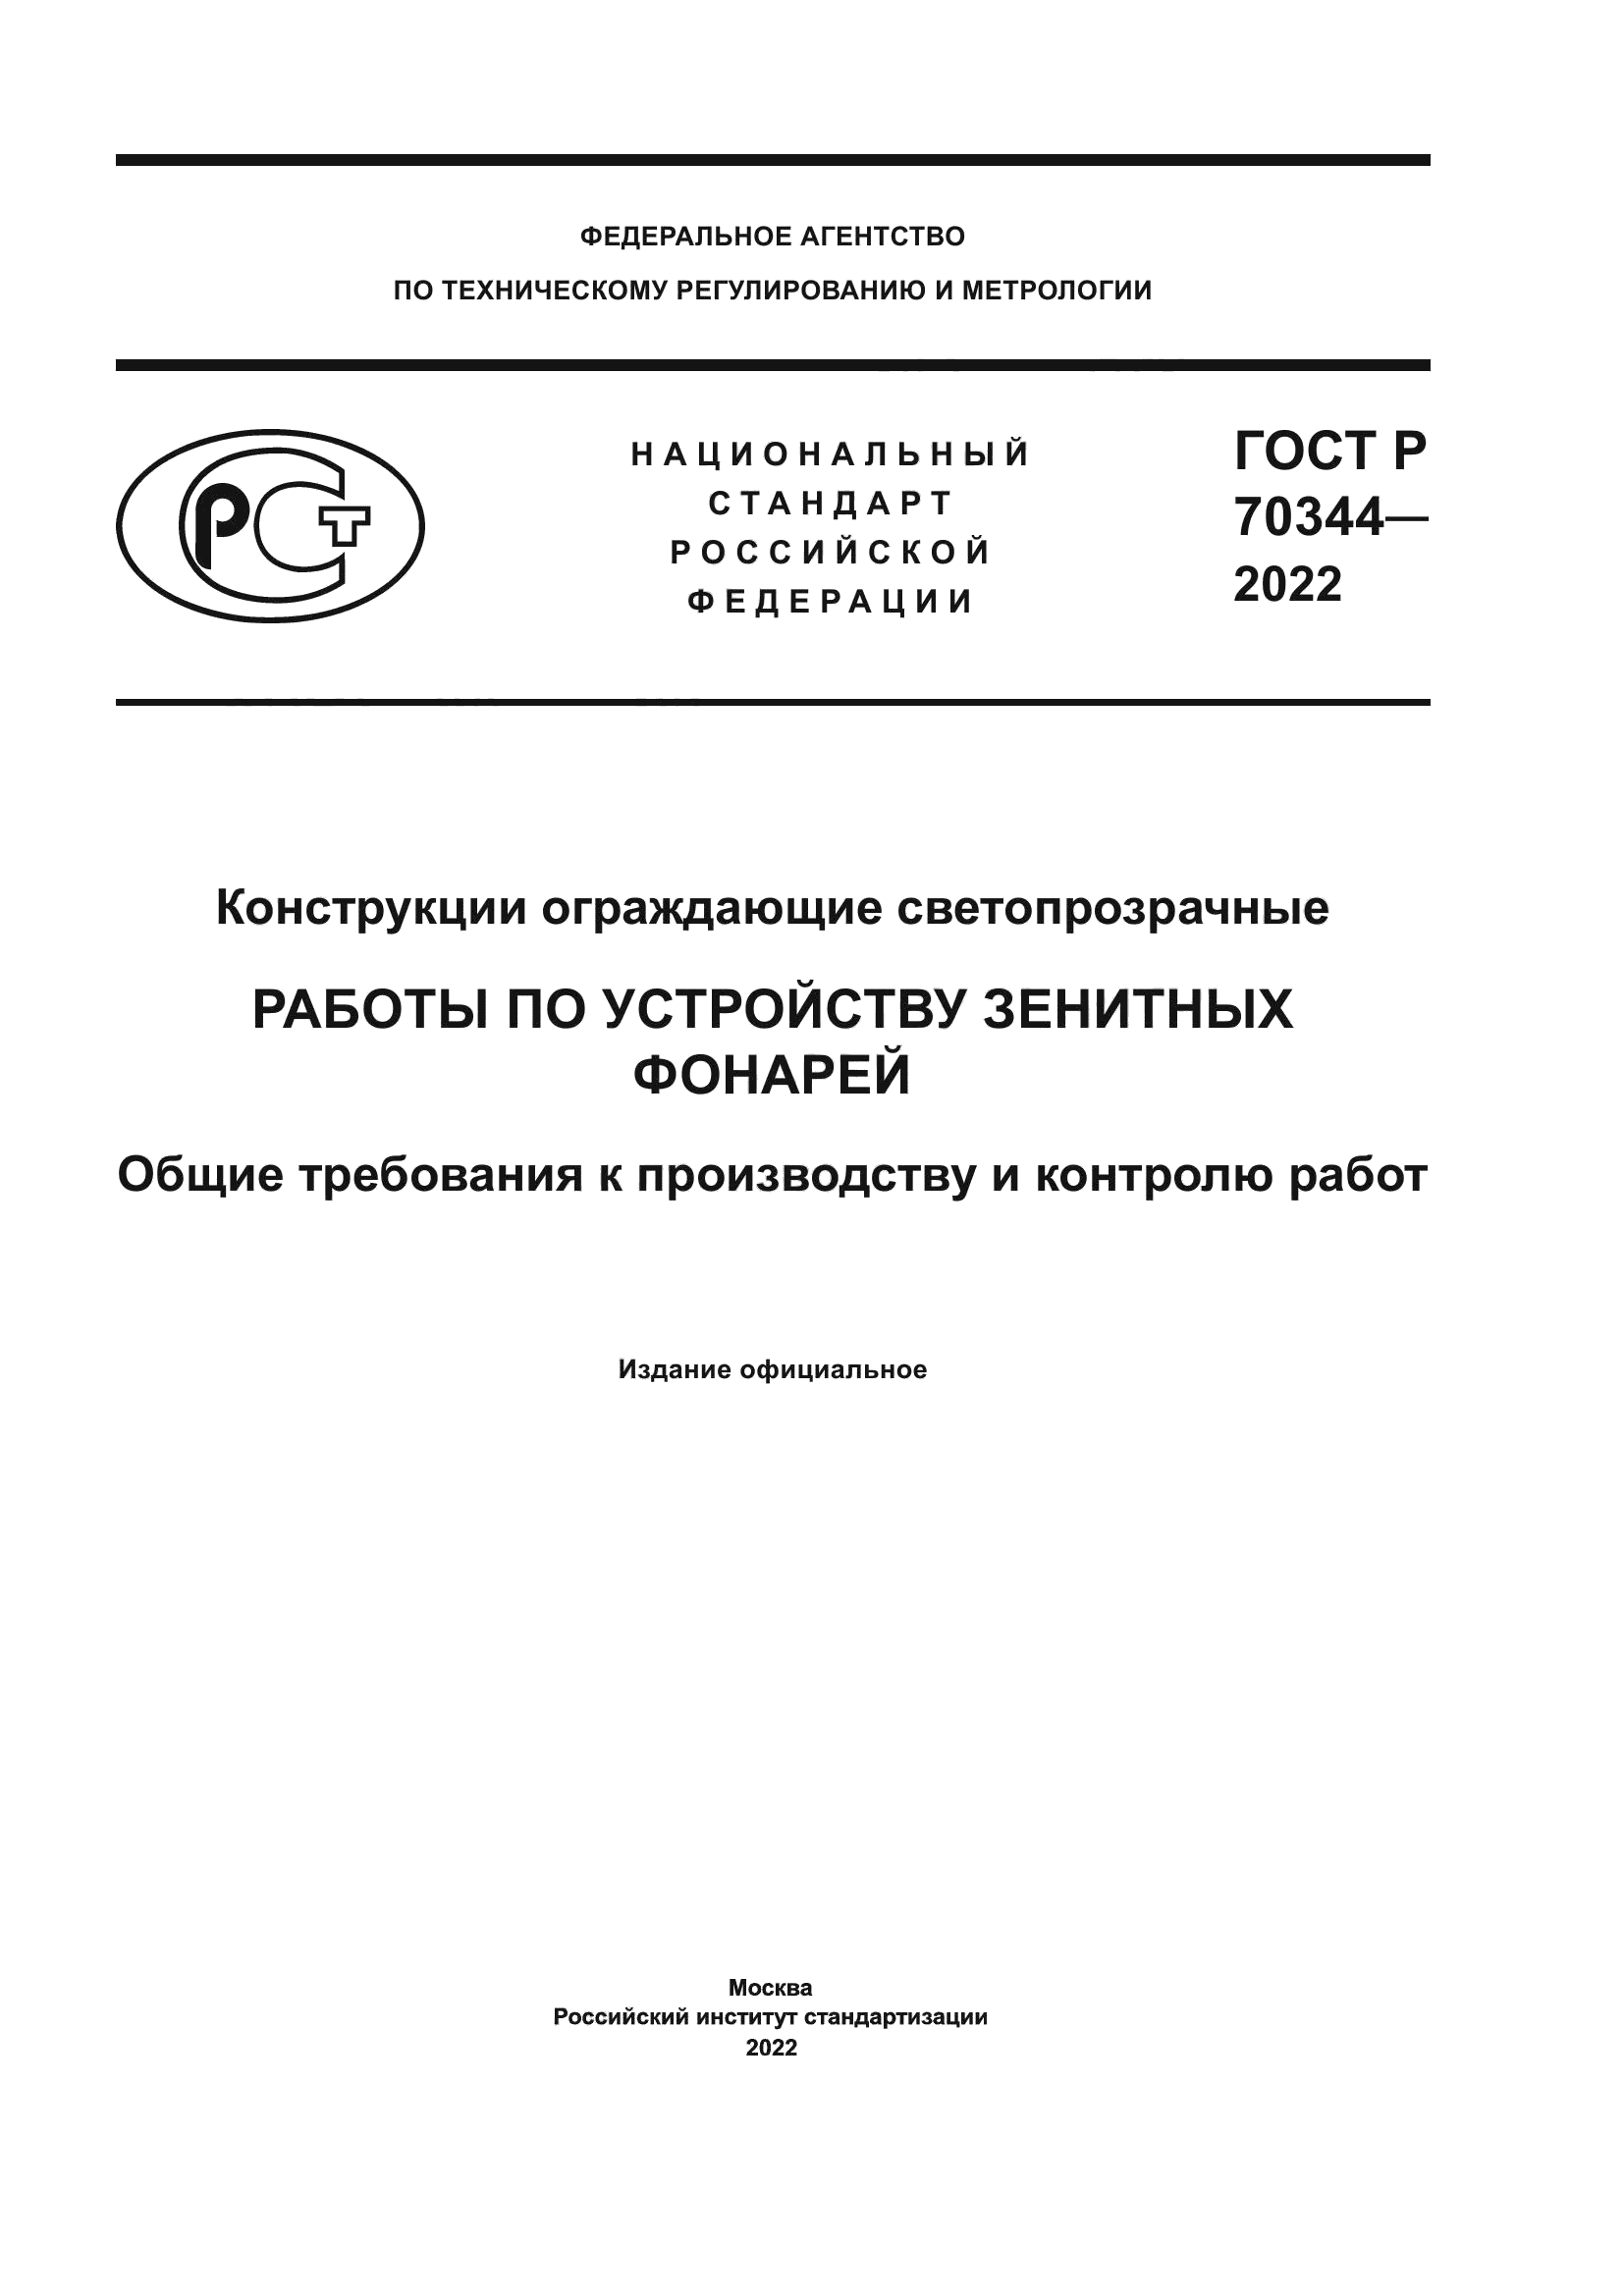 ГОСТ Р 70344-2022